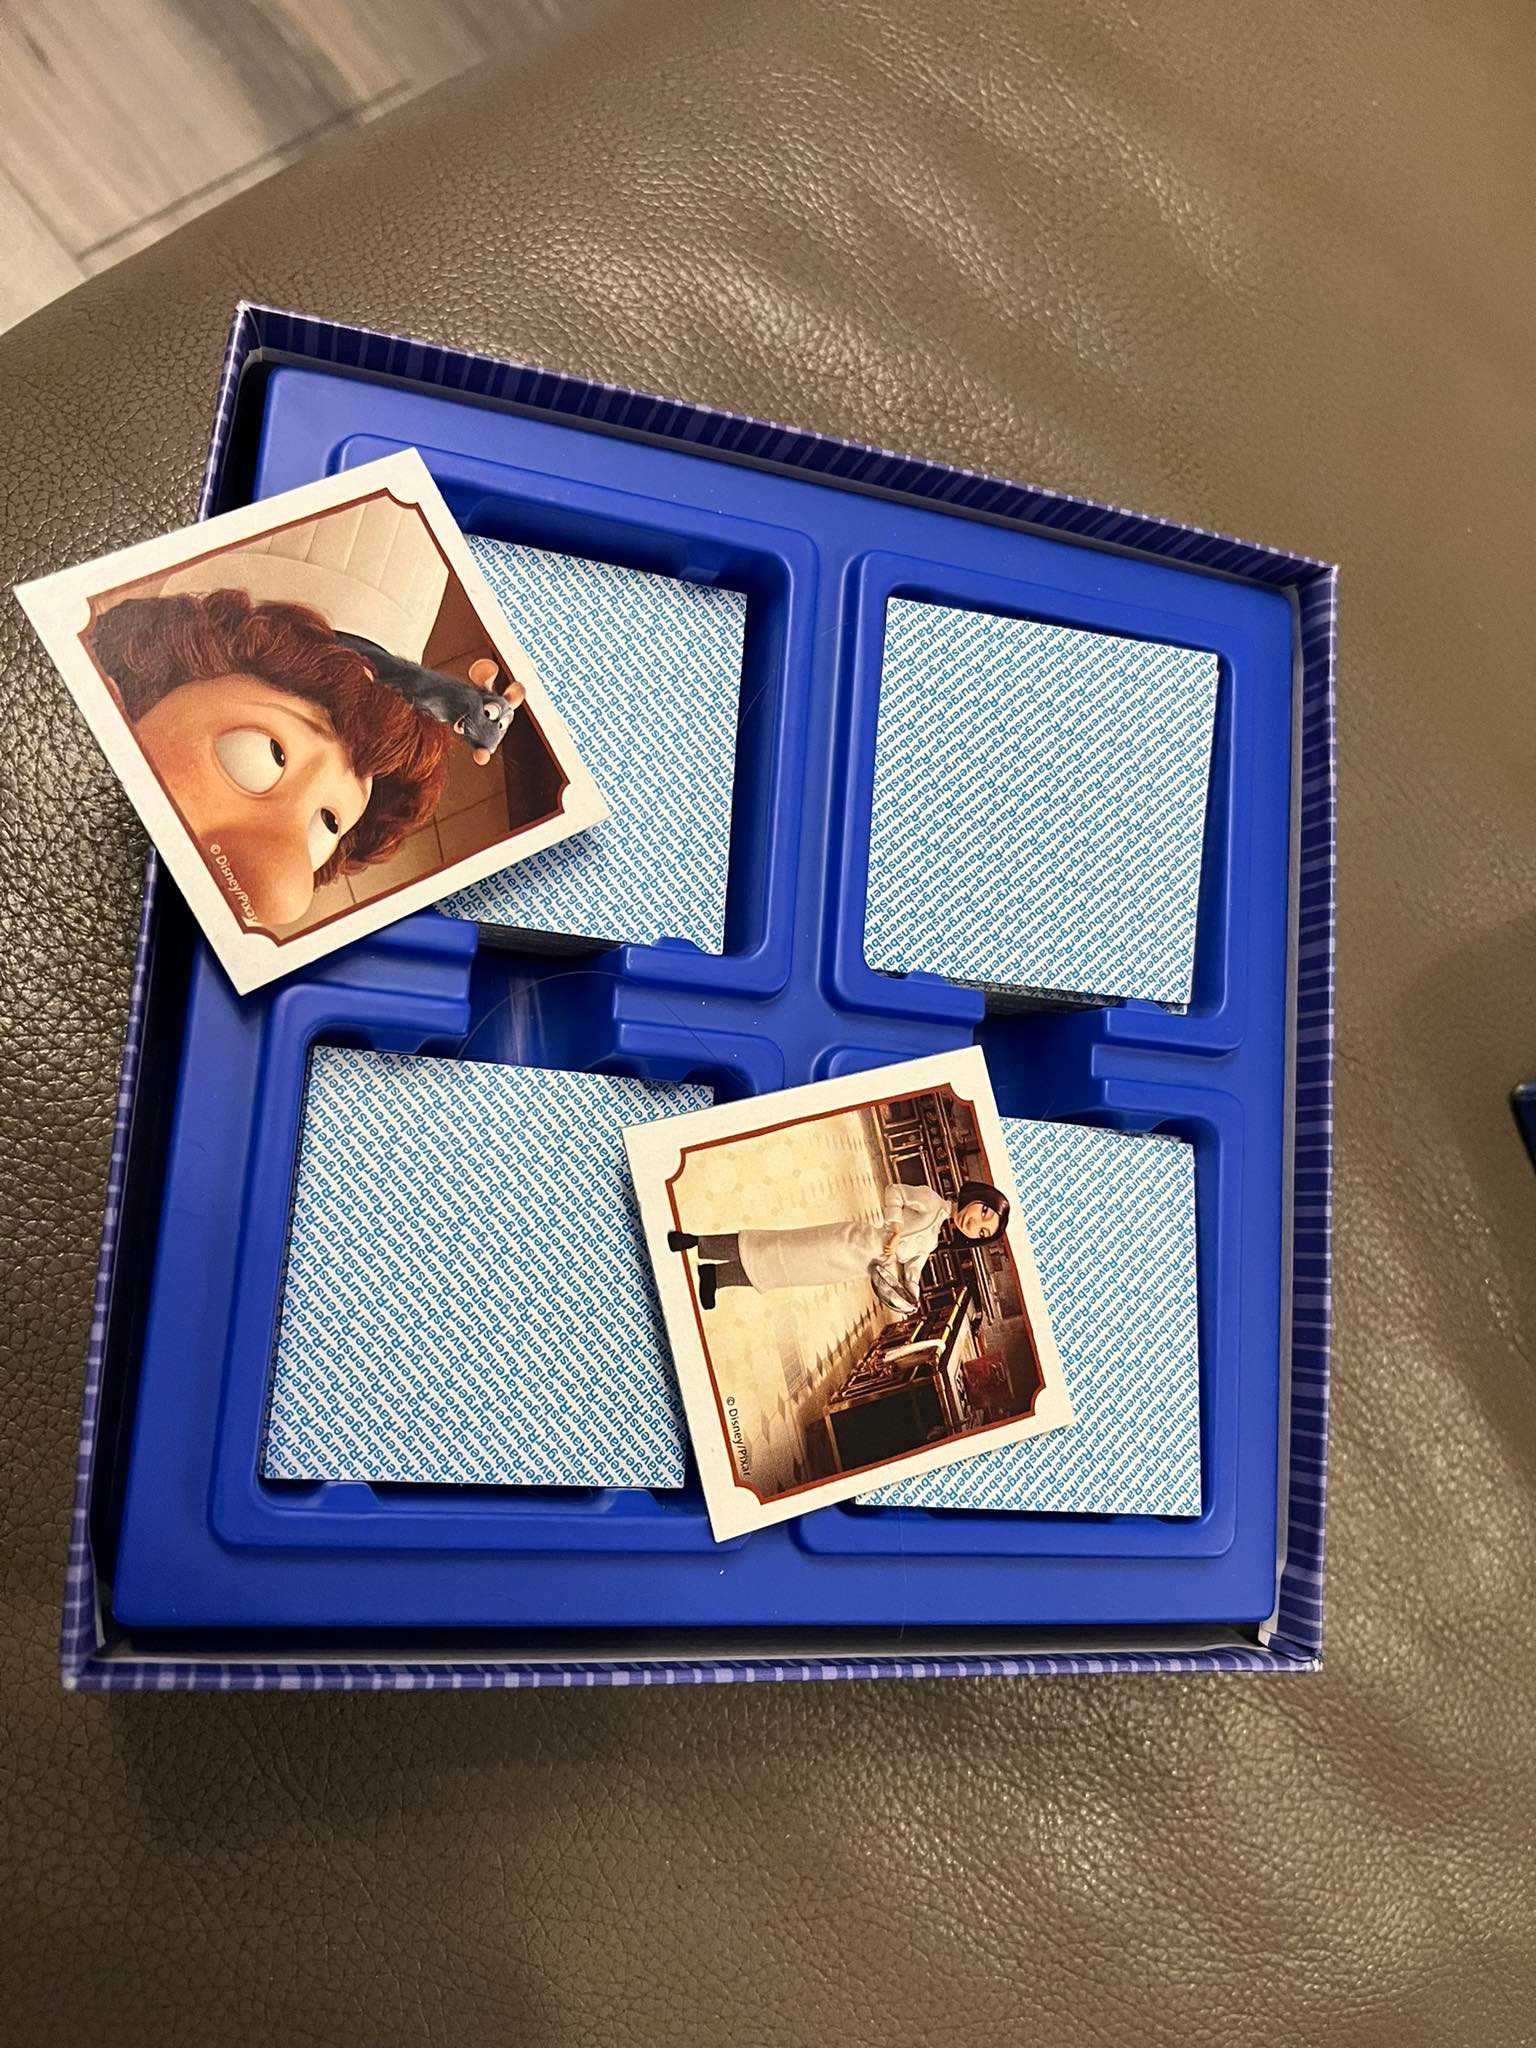 Gra planszowa pamięć Memory Disney Ratatuj Ratatouille